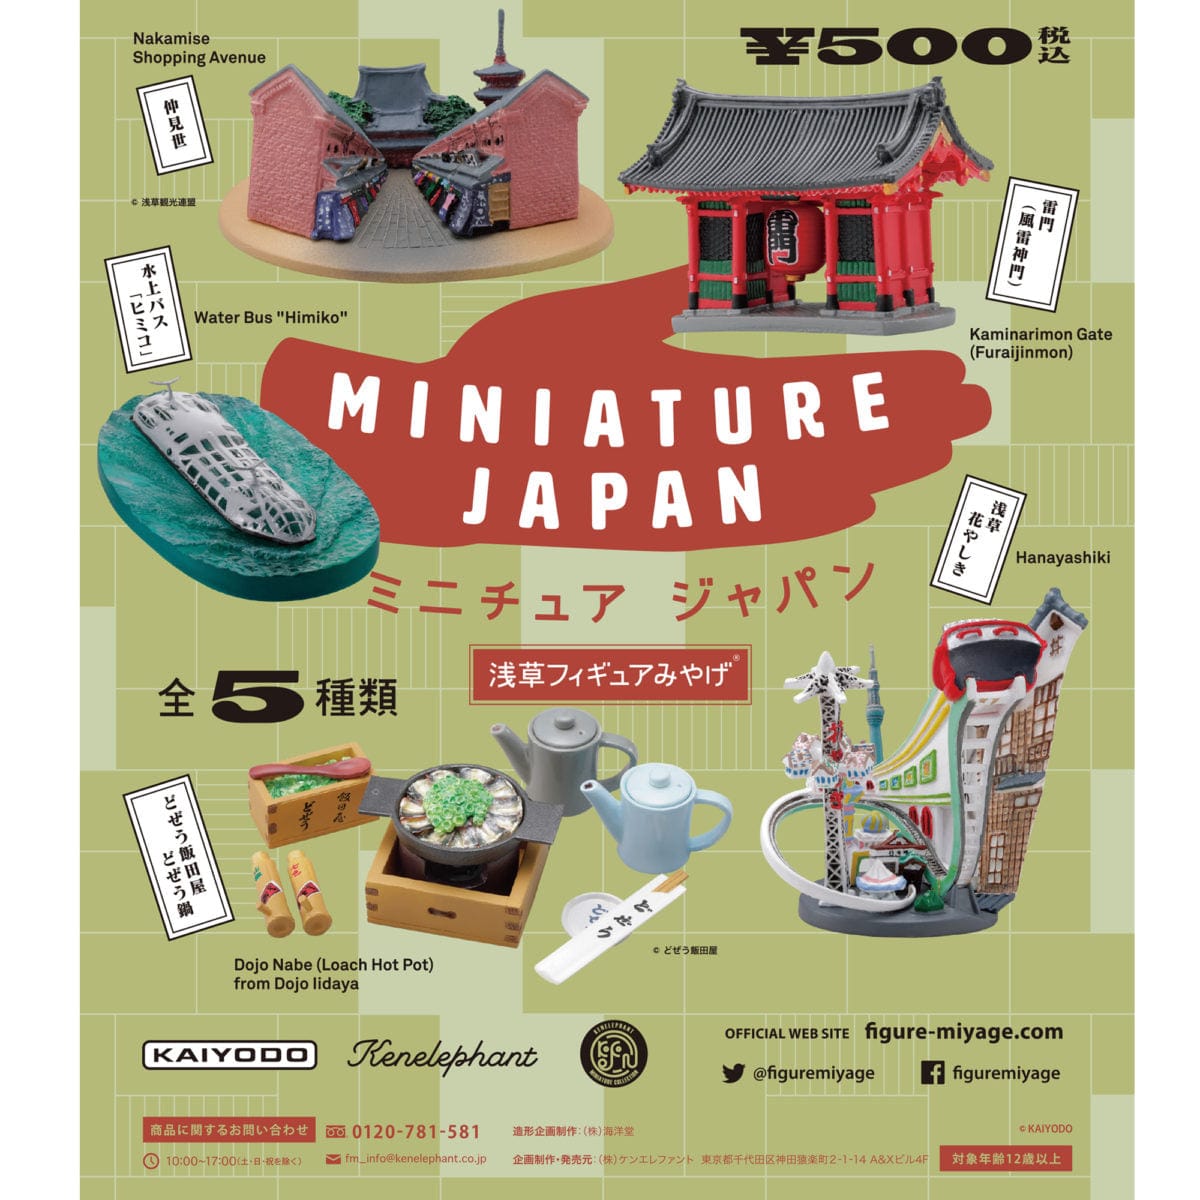 Kenelephant Kenelephant Miniature Collection (Capsule) Miniature Japan - Asakusa Figure Miyage